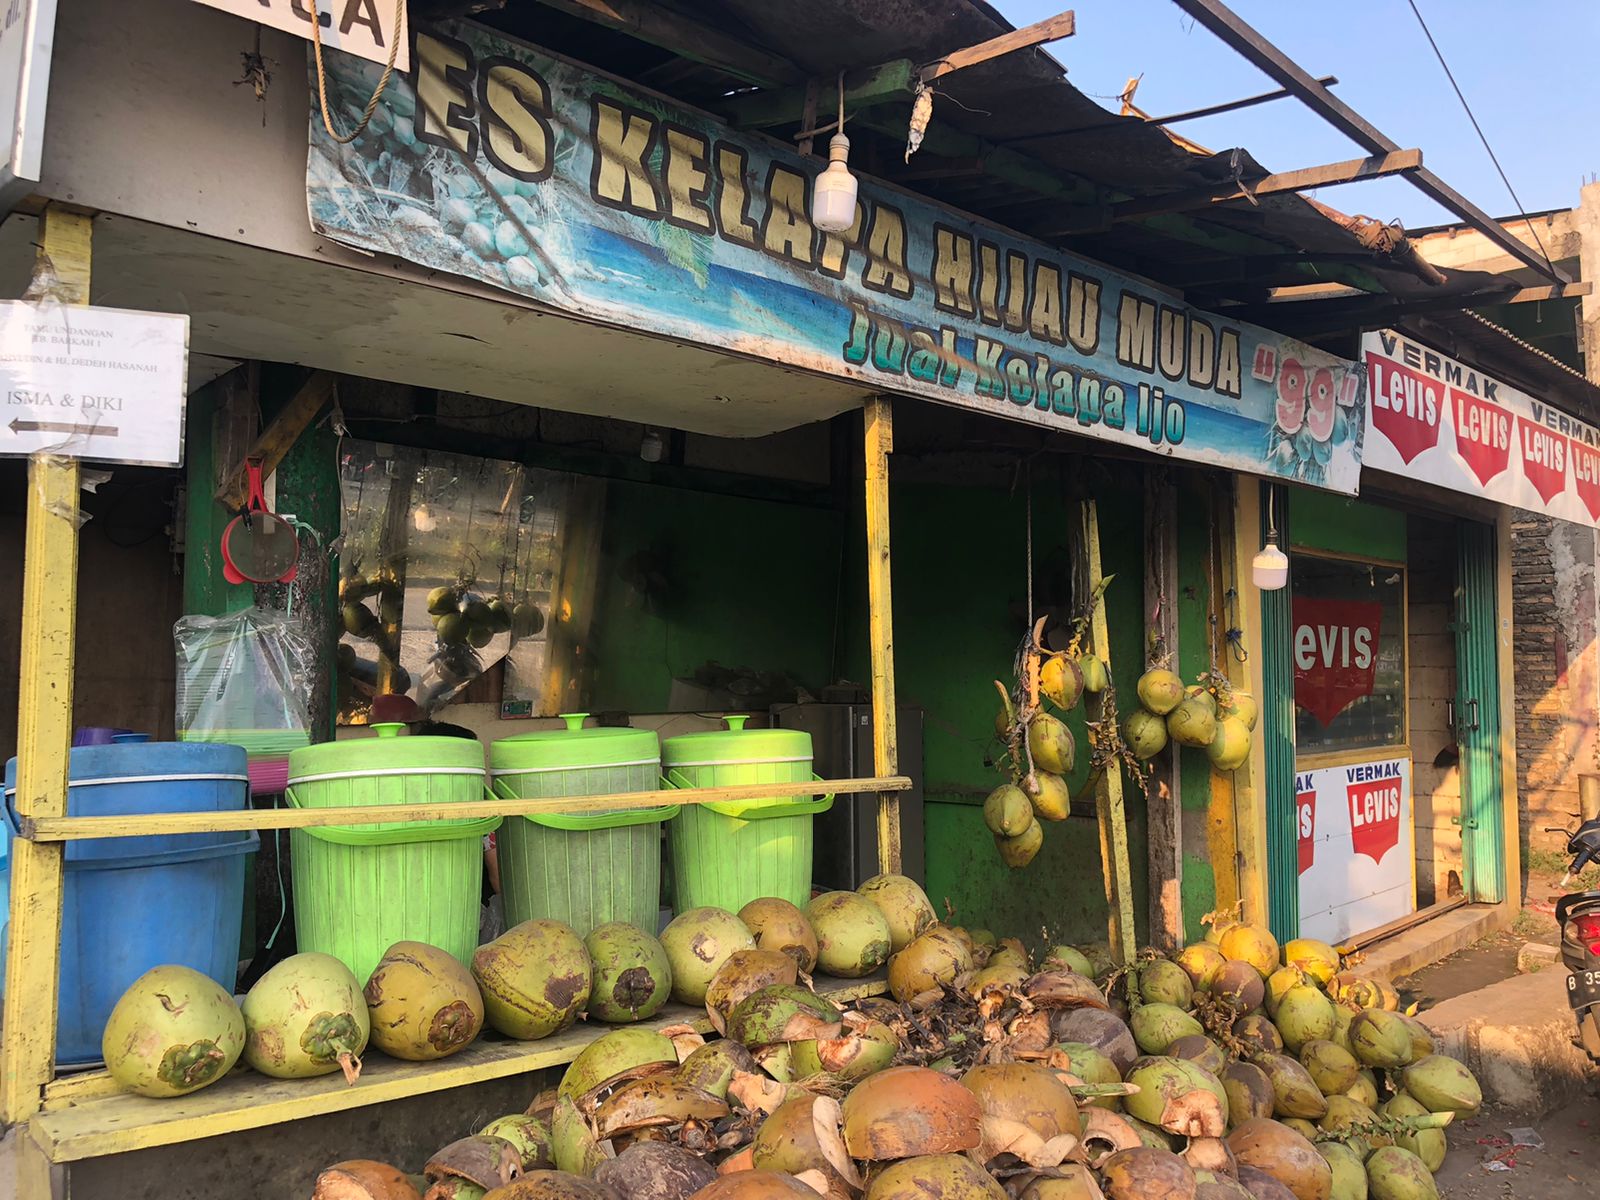 Sejumlah kelapa yang ispa untuk dijual.